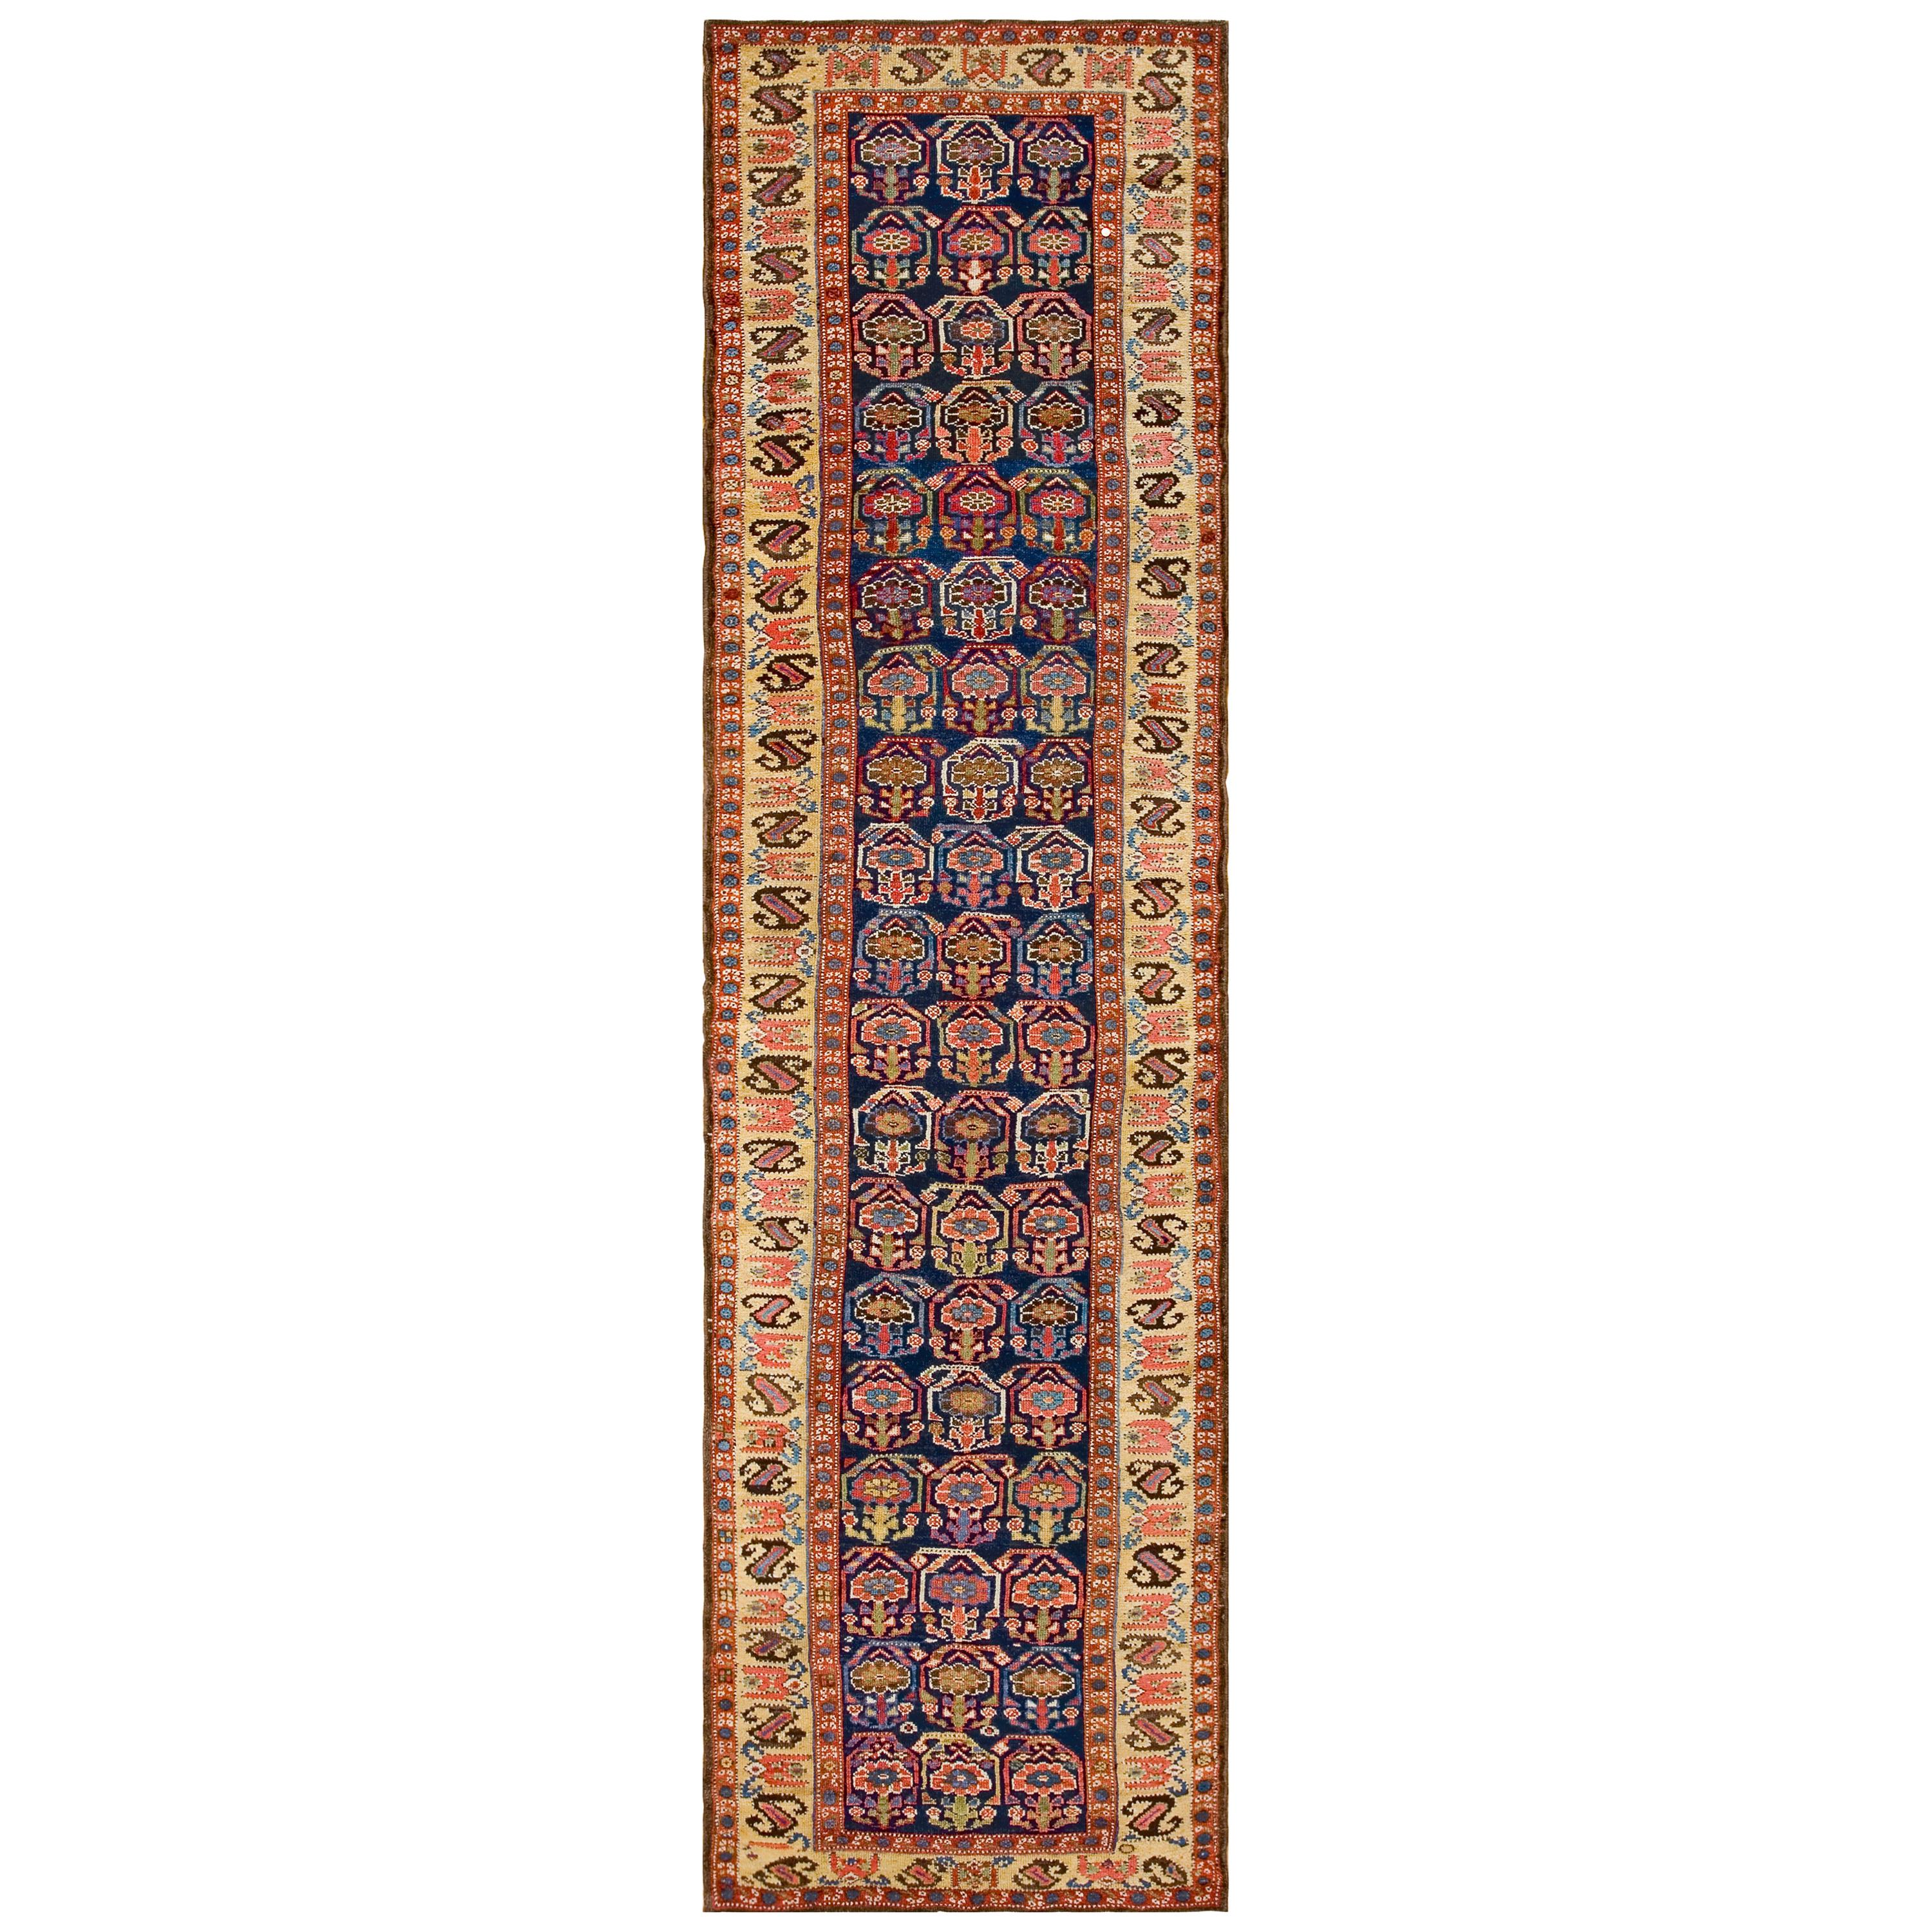 Mid 19th Century W. Persian Kurdish Carpet ( 3'6" x 13'6" - 107 x 411 ) For Sale